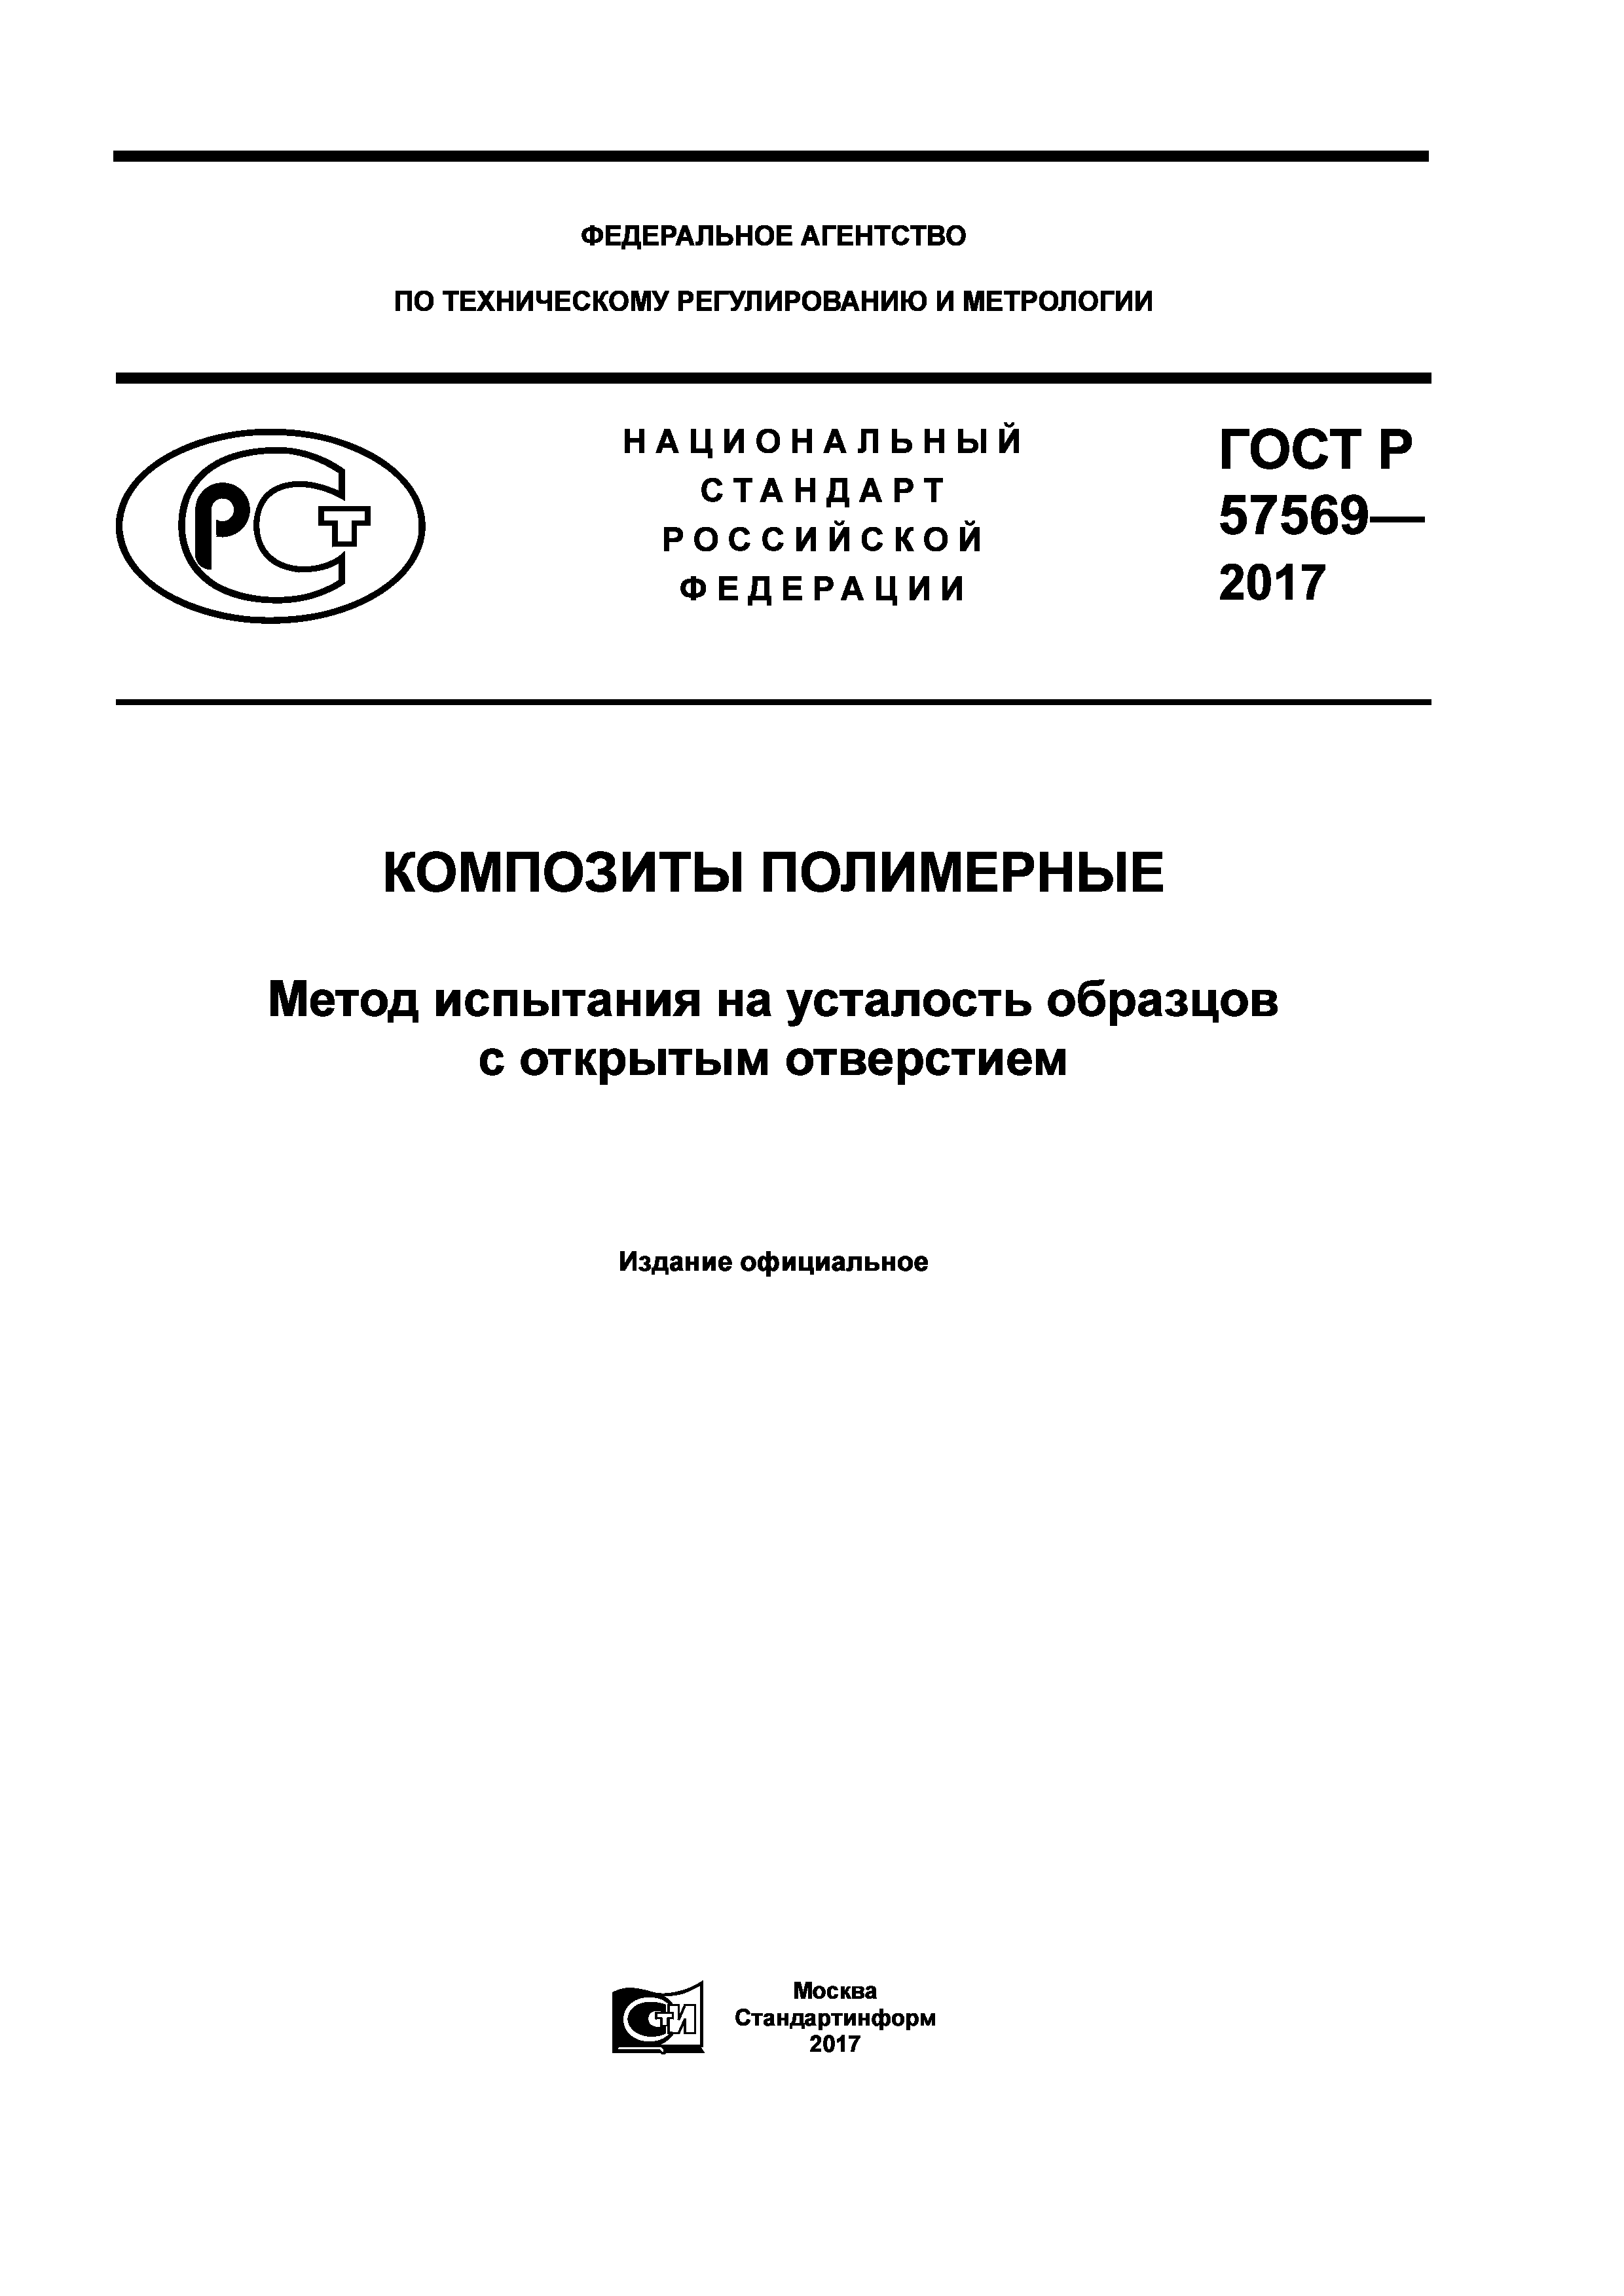 ГОСТ Р 57569-2017